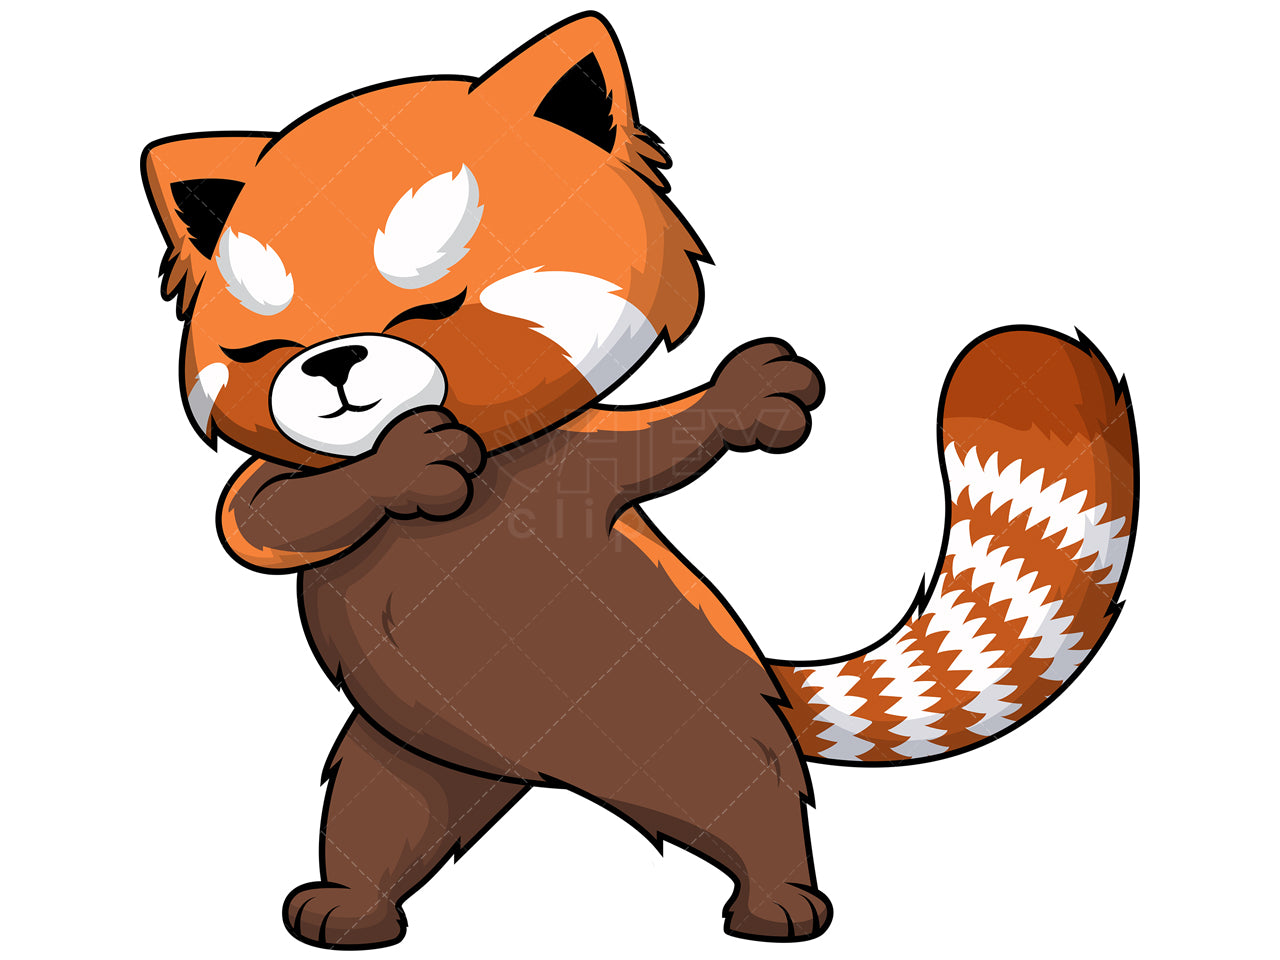 Royalty-free stock vector illustration of a dabbing red panda.